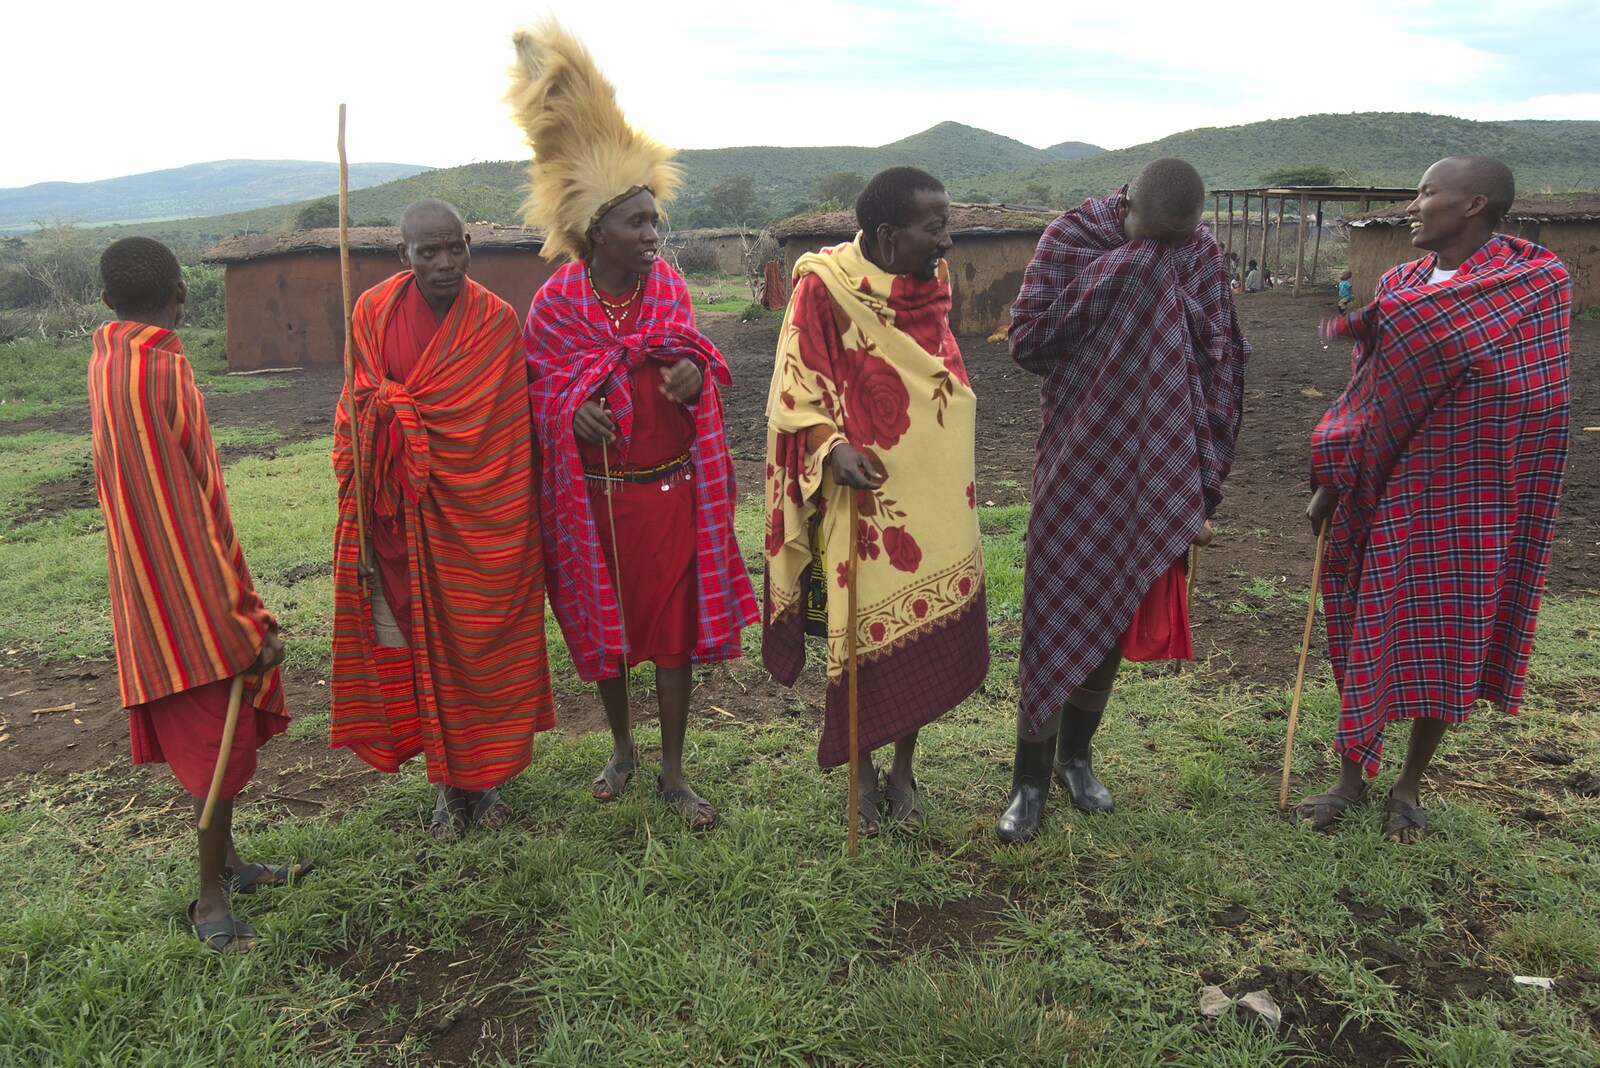 Maasai Mara Safari and a Maasai Village, Ololaimutia, Kenya - 5th November 2010: The men demonstrate their pre-wedding rituals